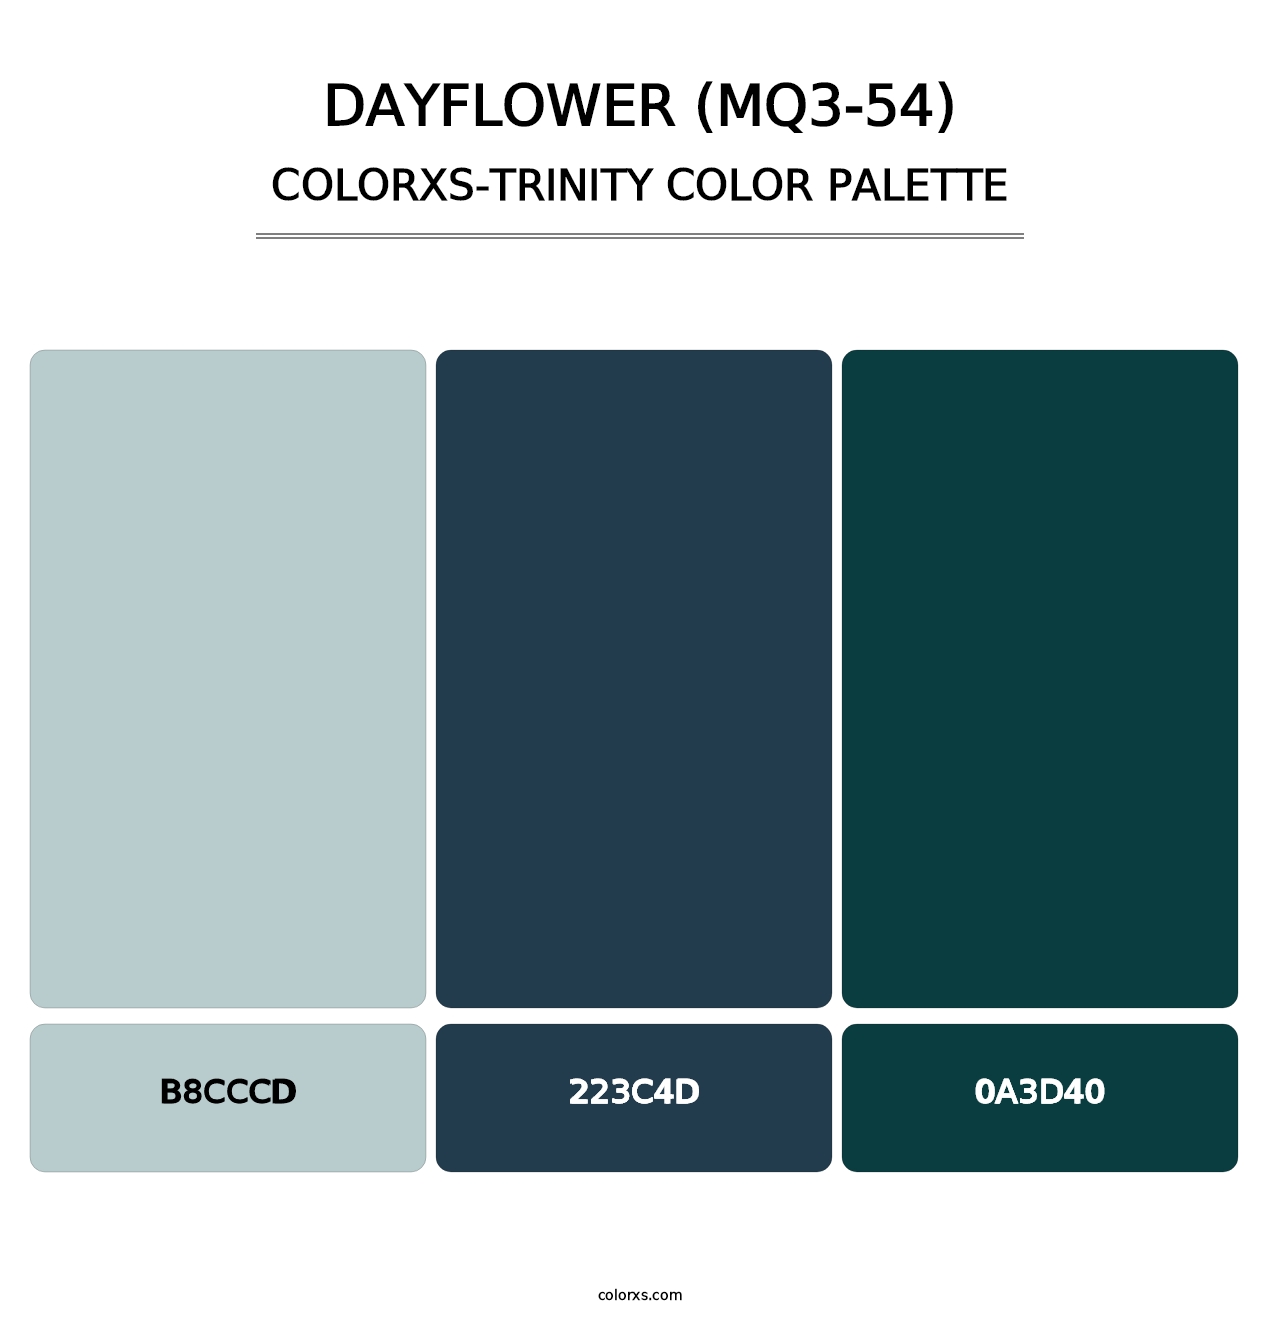 Dayflower (MQ3-54) - Colorxs Trinity Palette